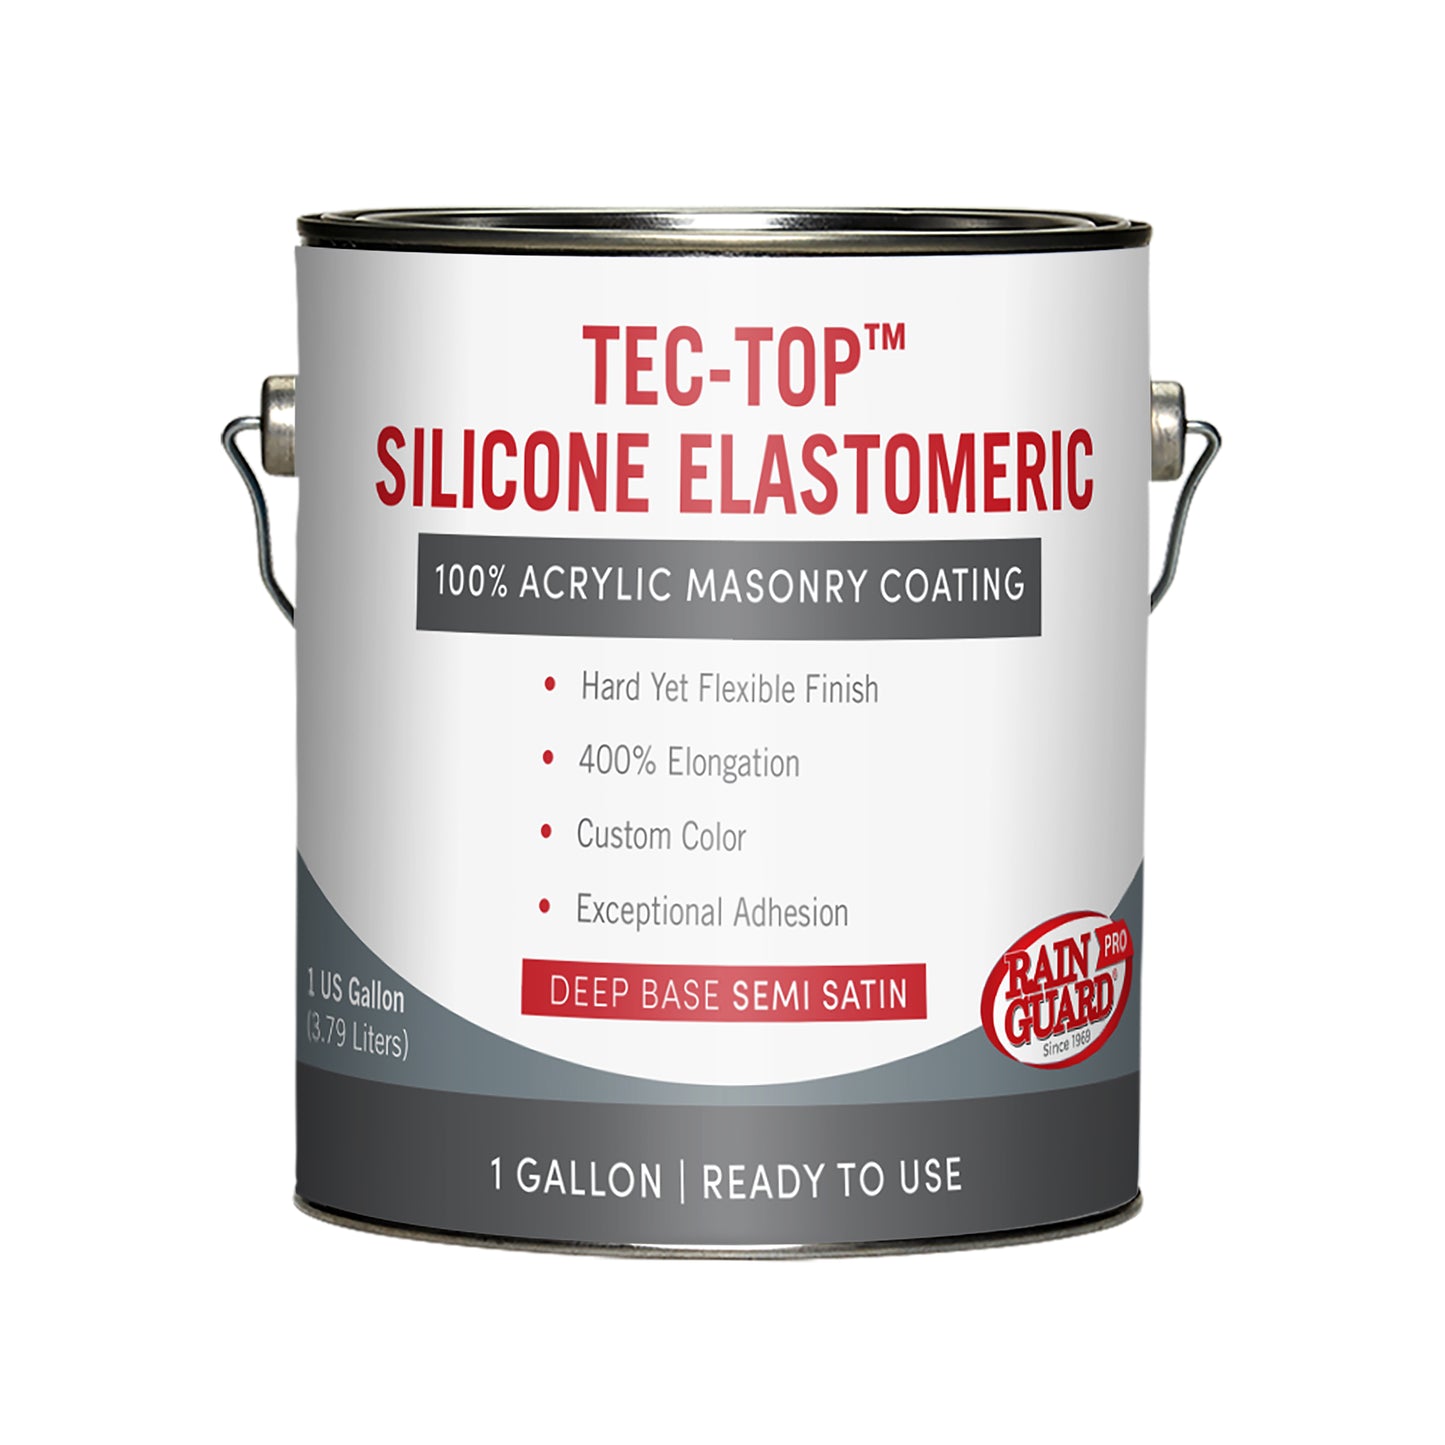 Tec-Top Silicone Elastomeric